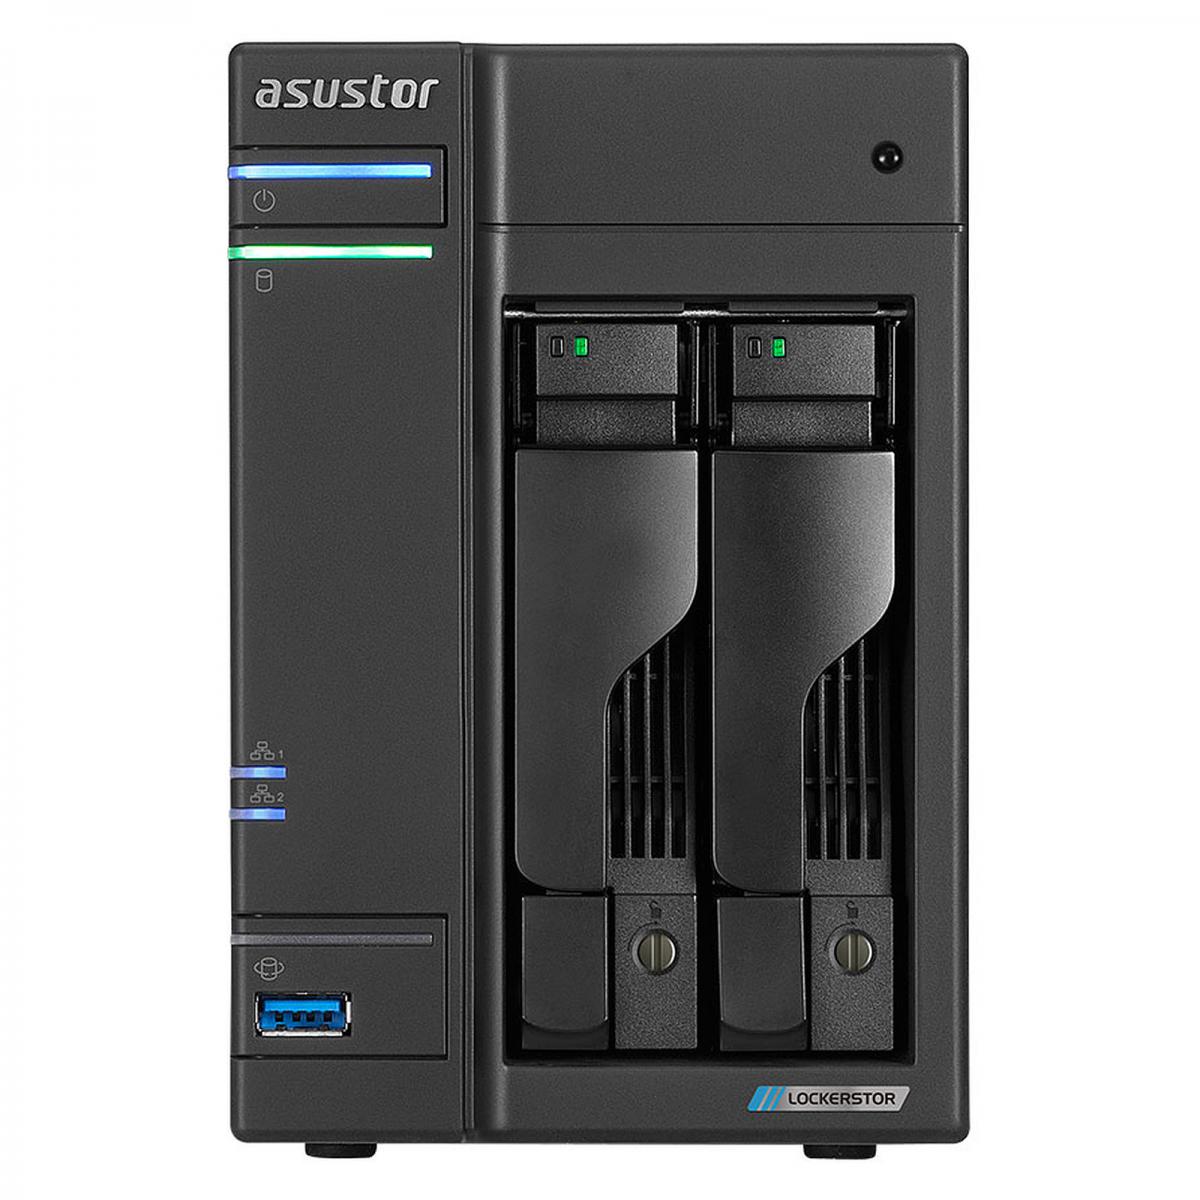 Asustor - Asustor AS6602T - NAS